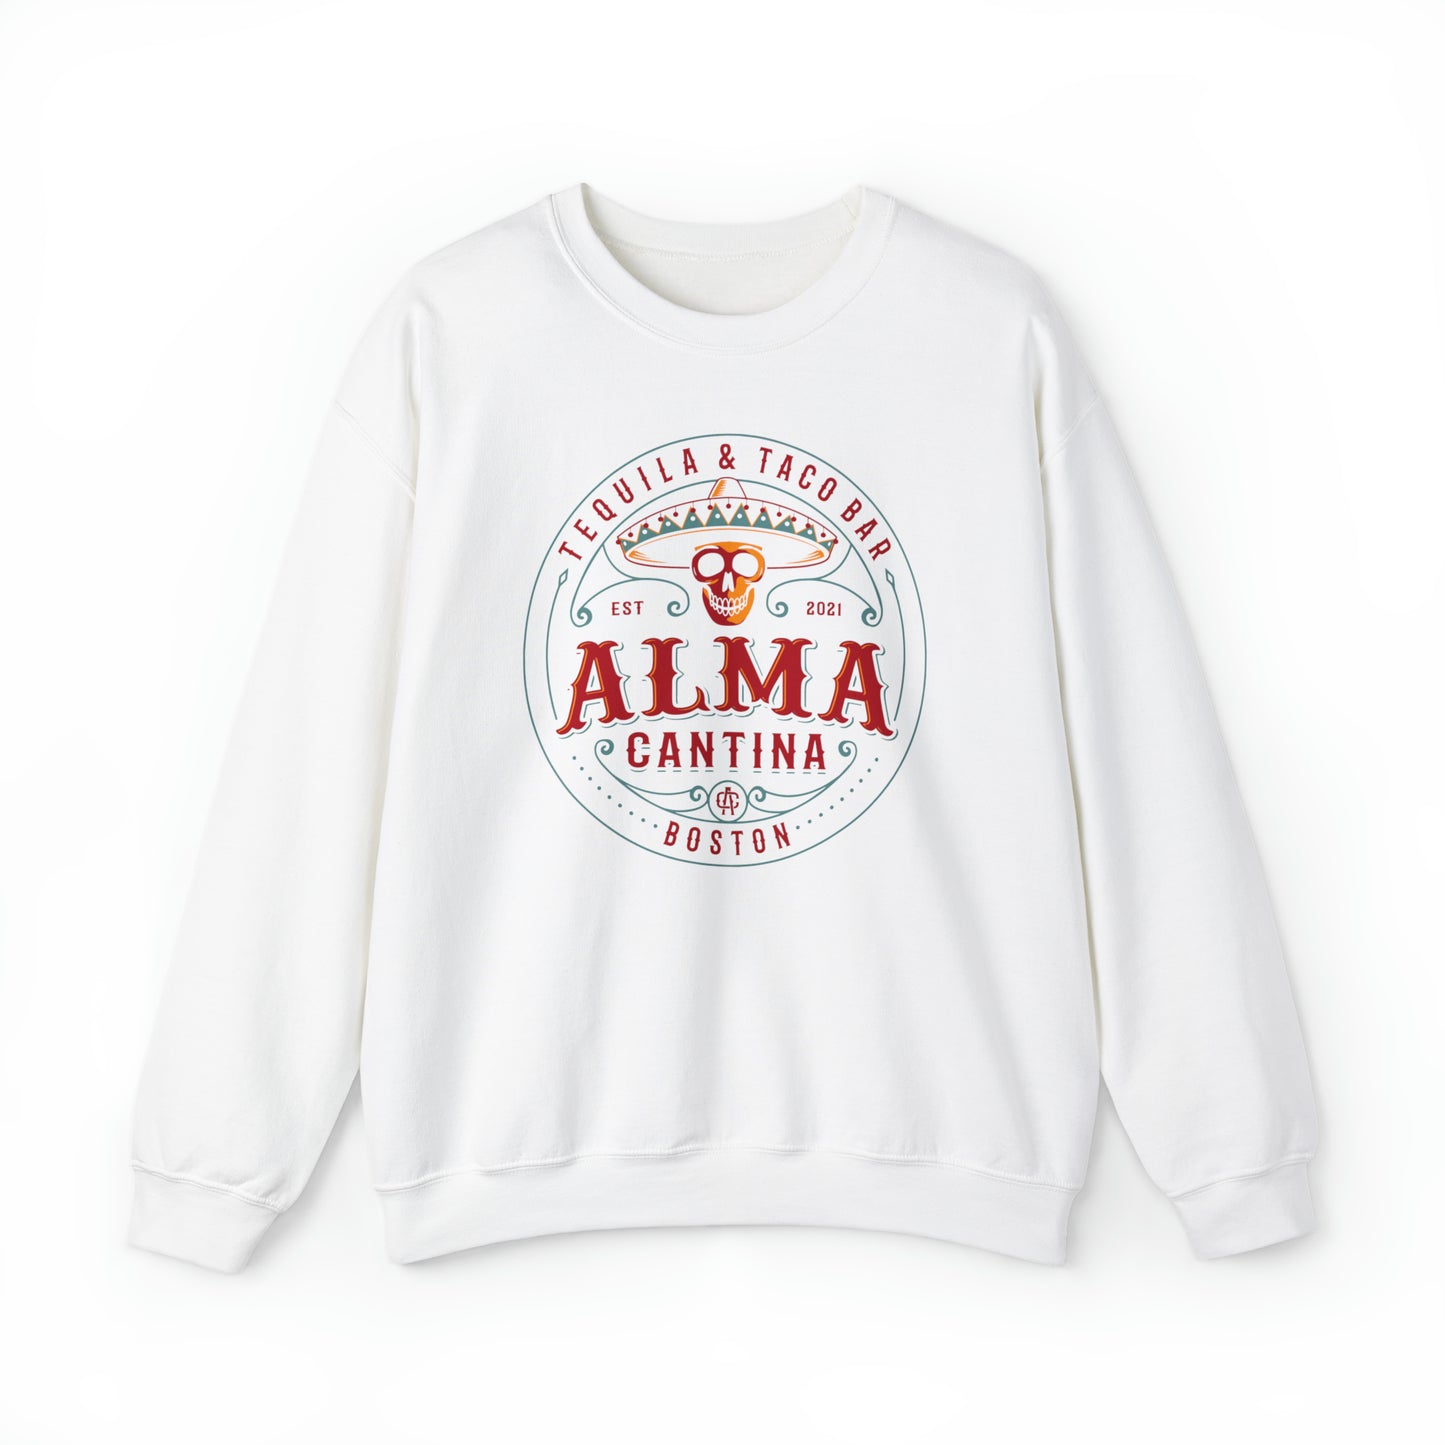 Alma Cantina Crewneck Sweatshirt